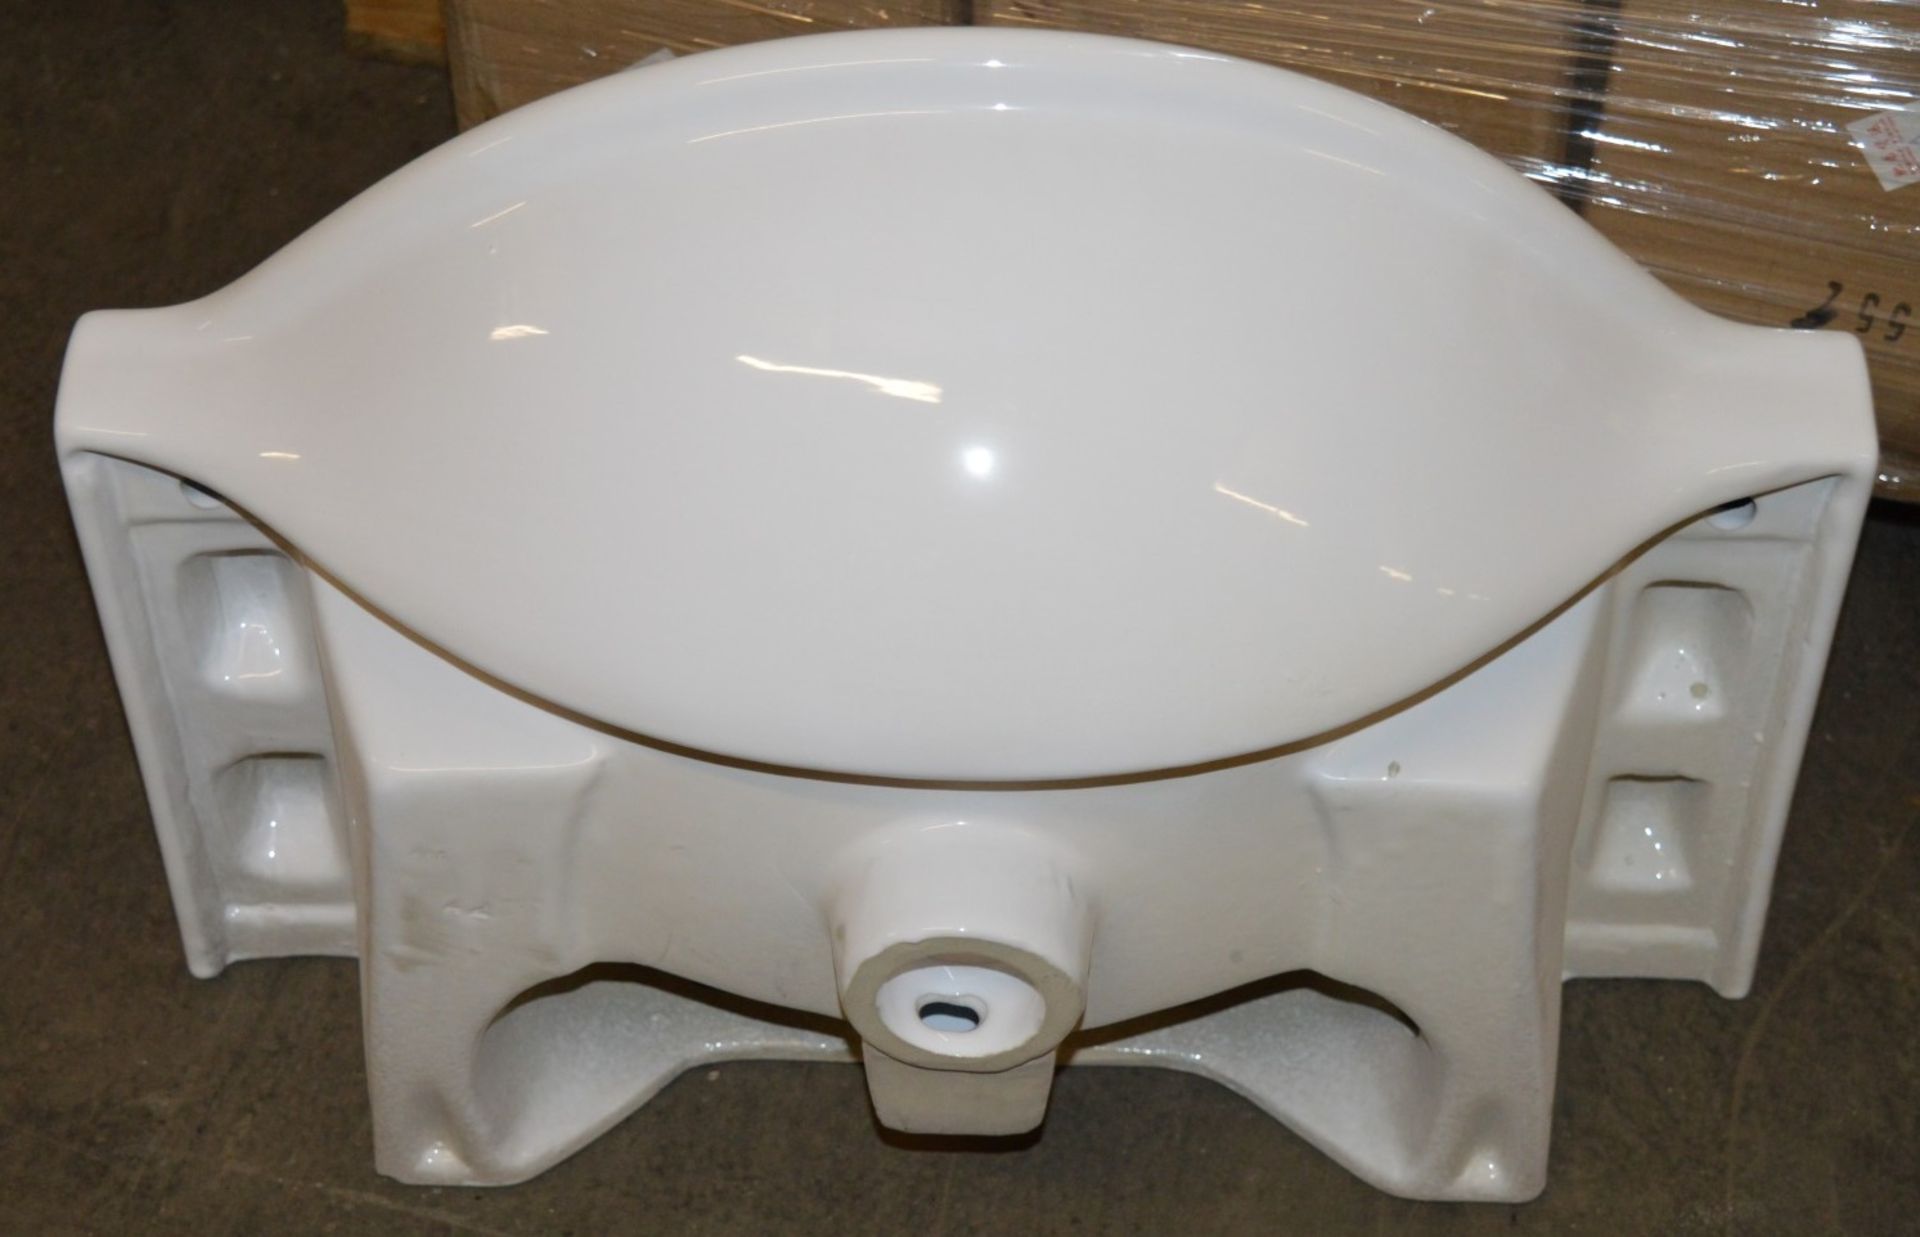 10 x Vogue Bathrooms LUNA Semi Recessed Bathroom Sink Basins - High Quality Ceramic Sink Basin - - Image 3 of 4